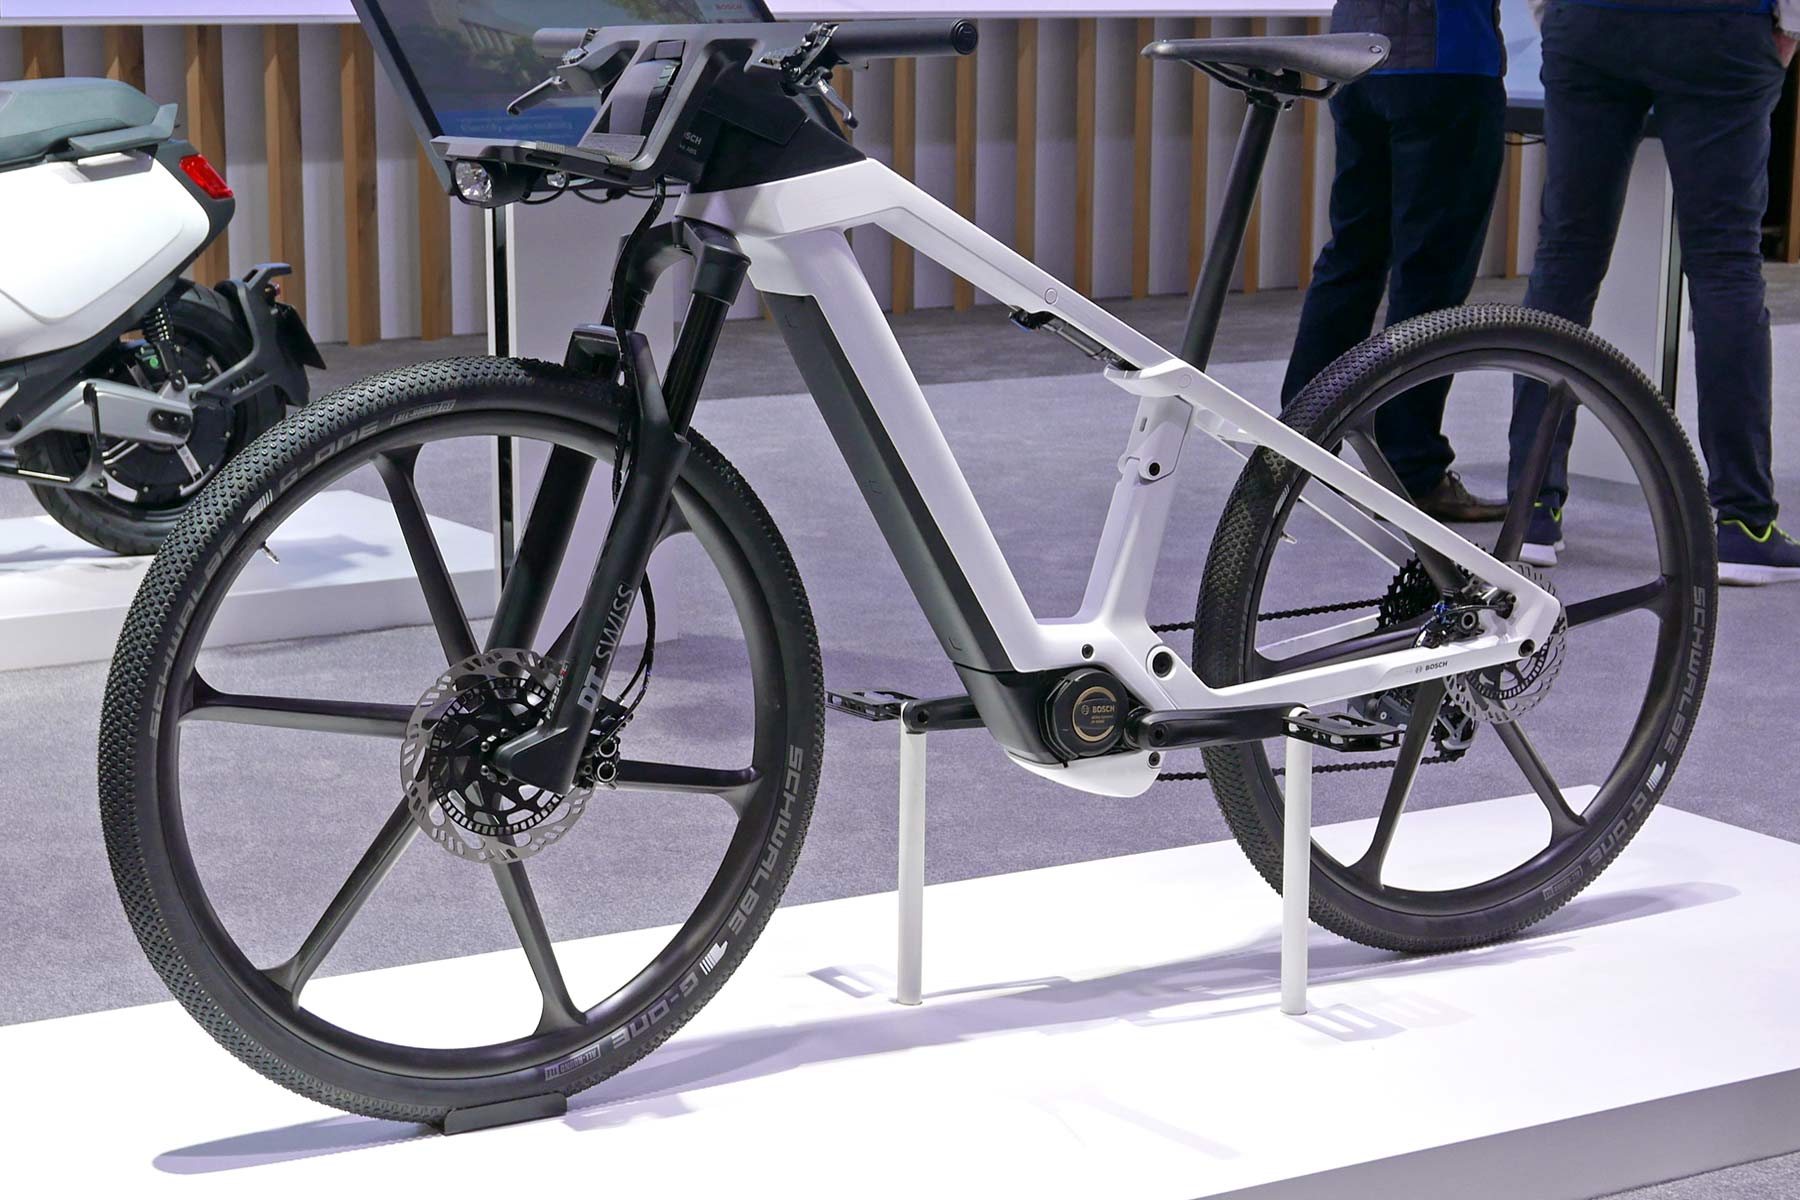 Bosch eBike ABS prototype e-bike with integrated anti-lock braking, complete bike